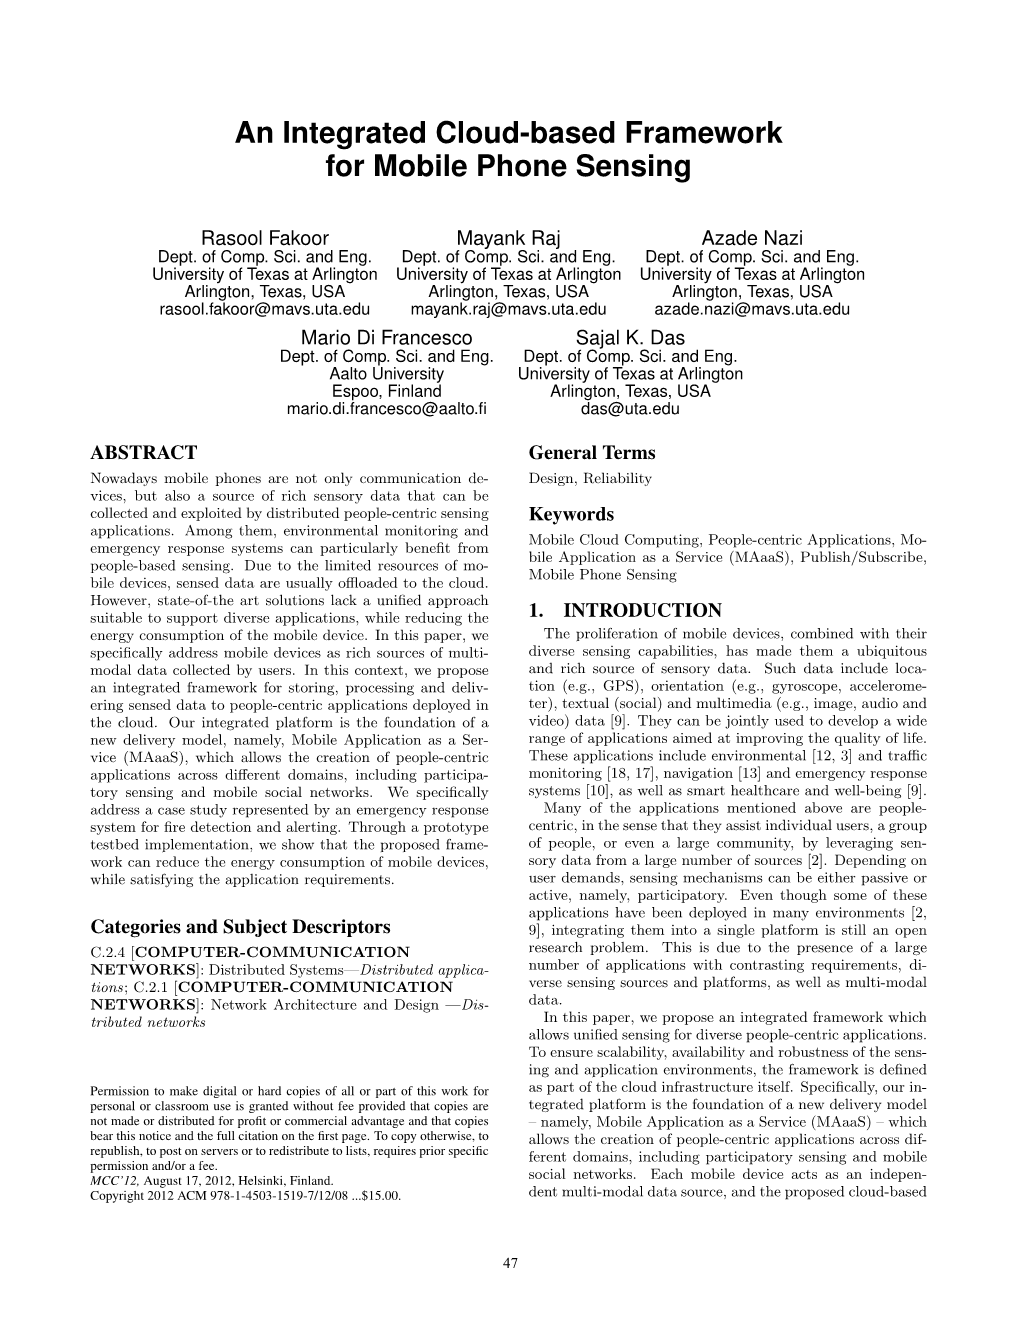 An Integrated Cloud-Based Framework for Mobile Phone Sensing